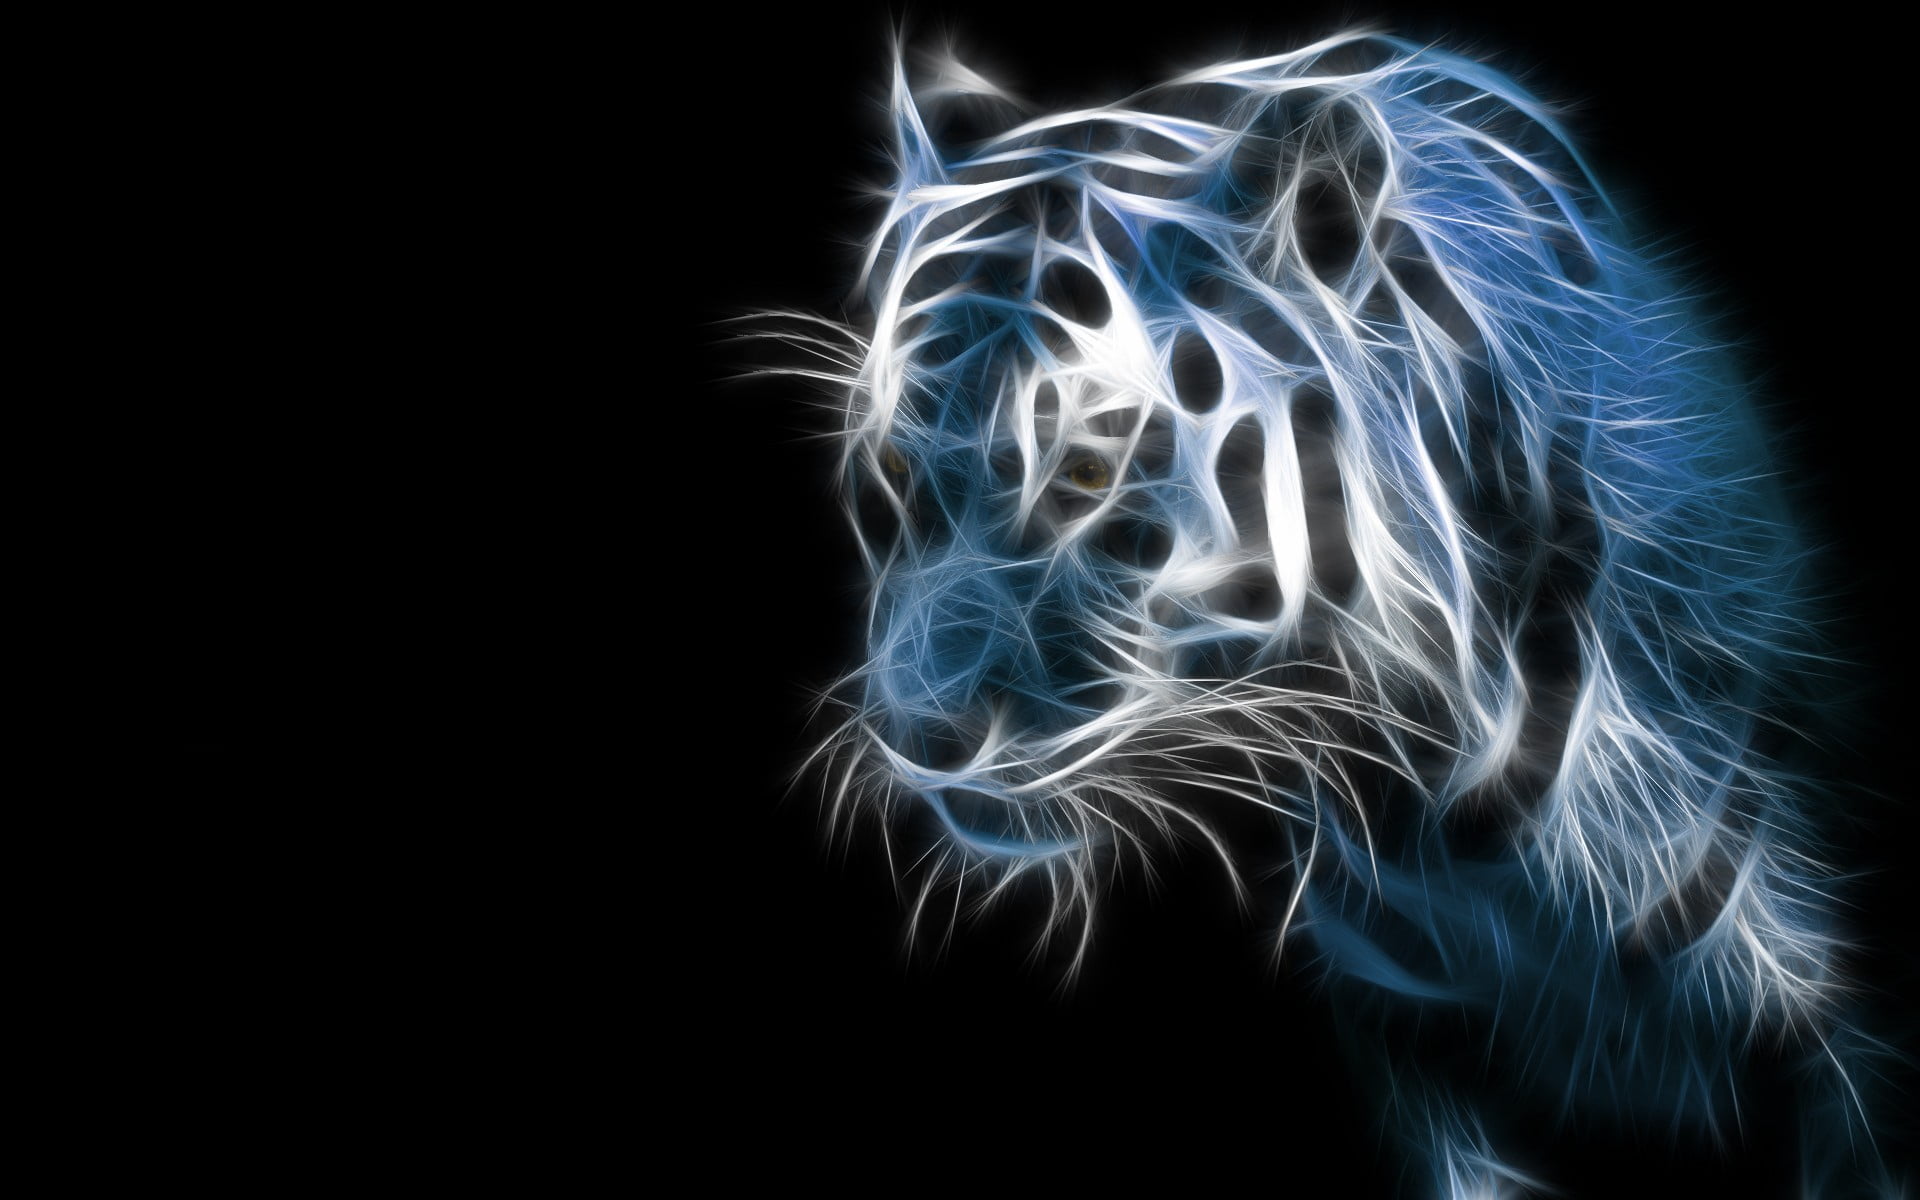 white tiger graphics 3D wallpaper, Fractalius, animals, blue